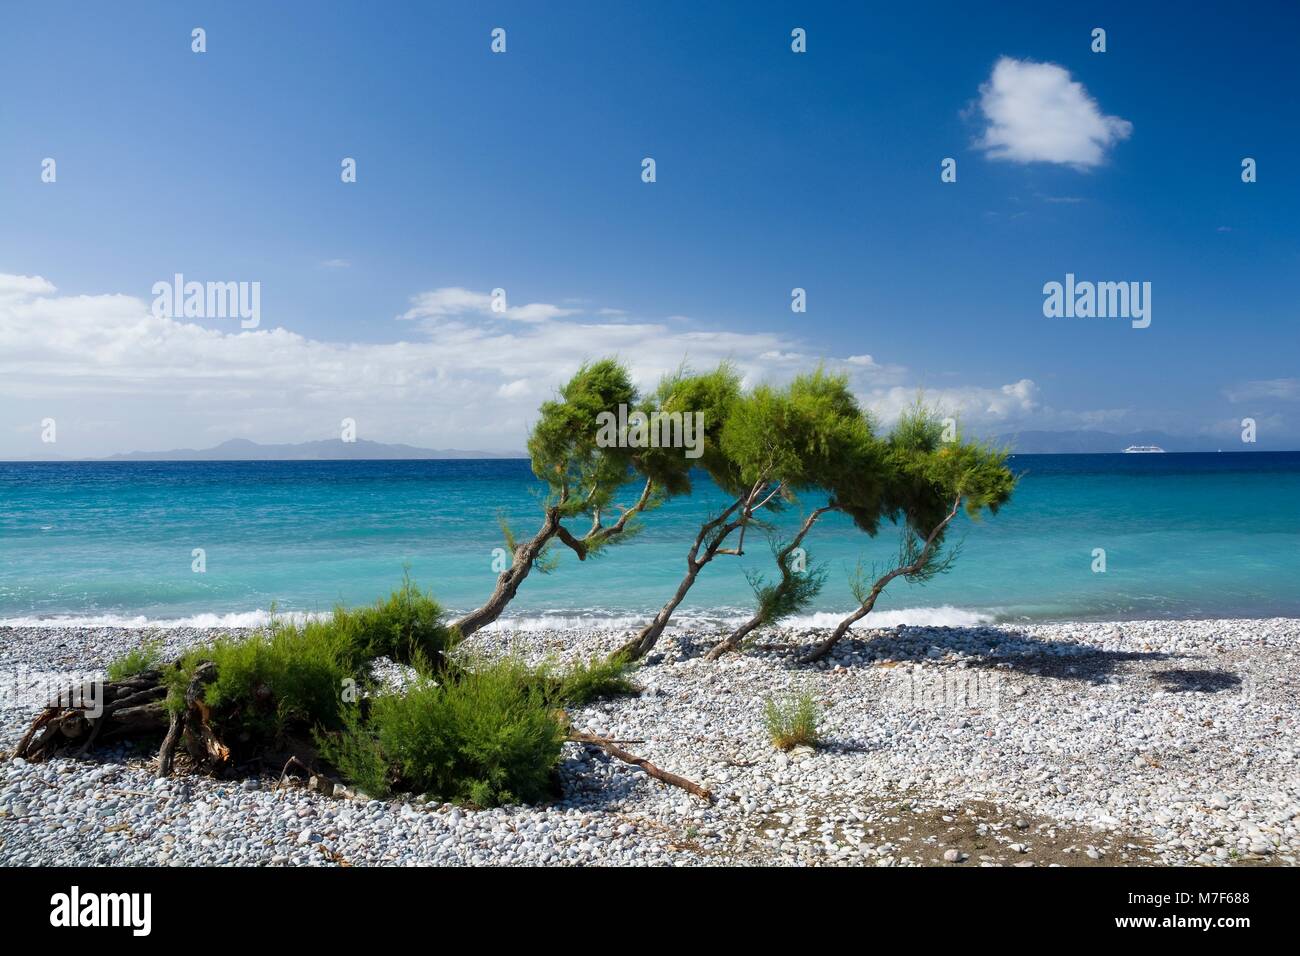 View of pebbly beach on western coast of Rhodes Island, Aegean Sea and Turkey coast in the background, Ialyssos, Greece Stock Photo